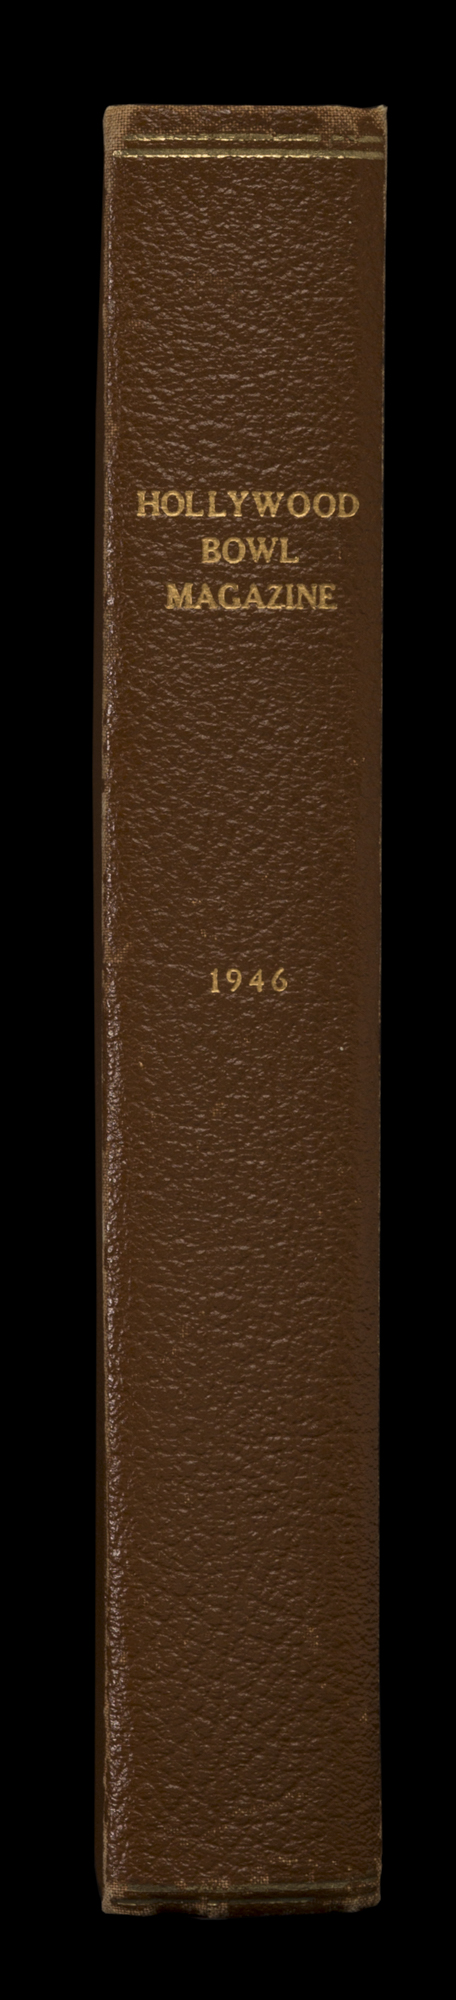 HB_ProgramBook_Spine_1946.jpg